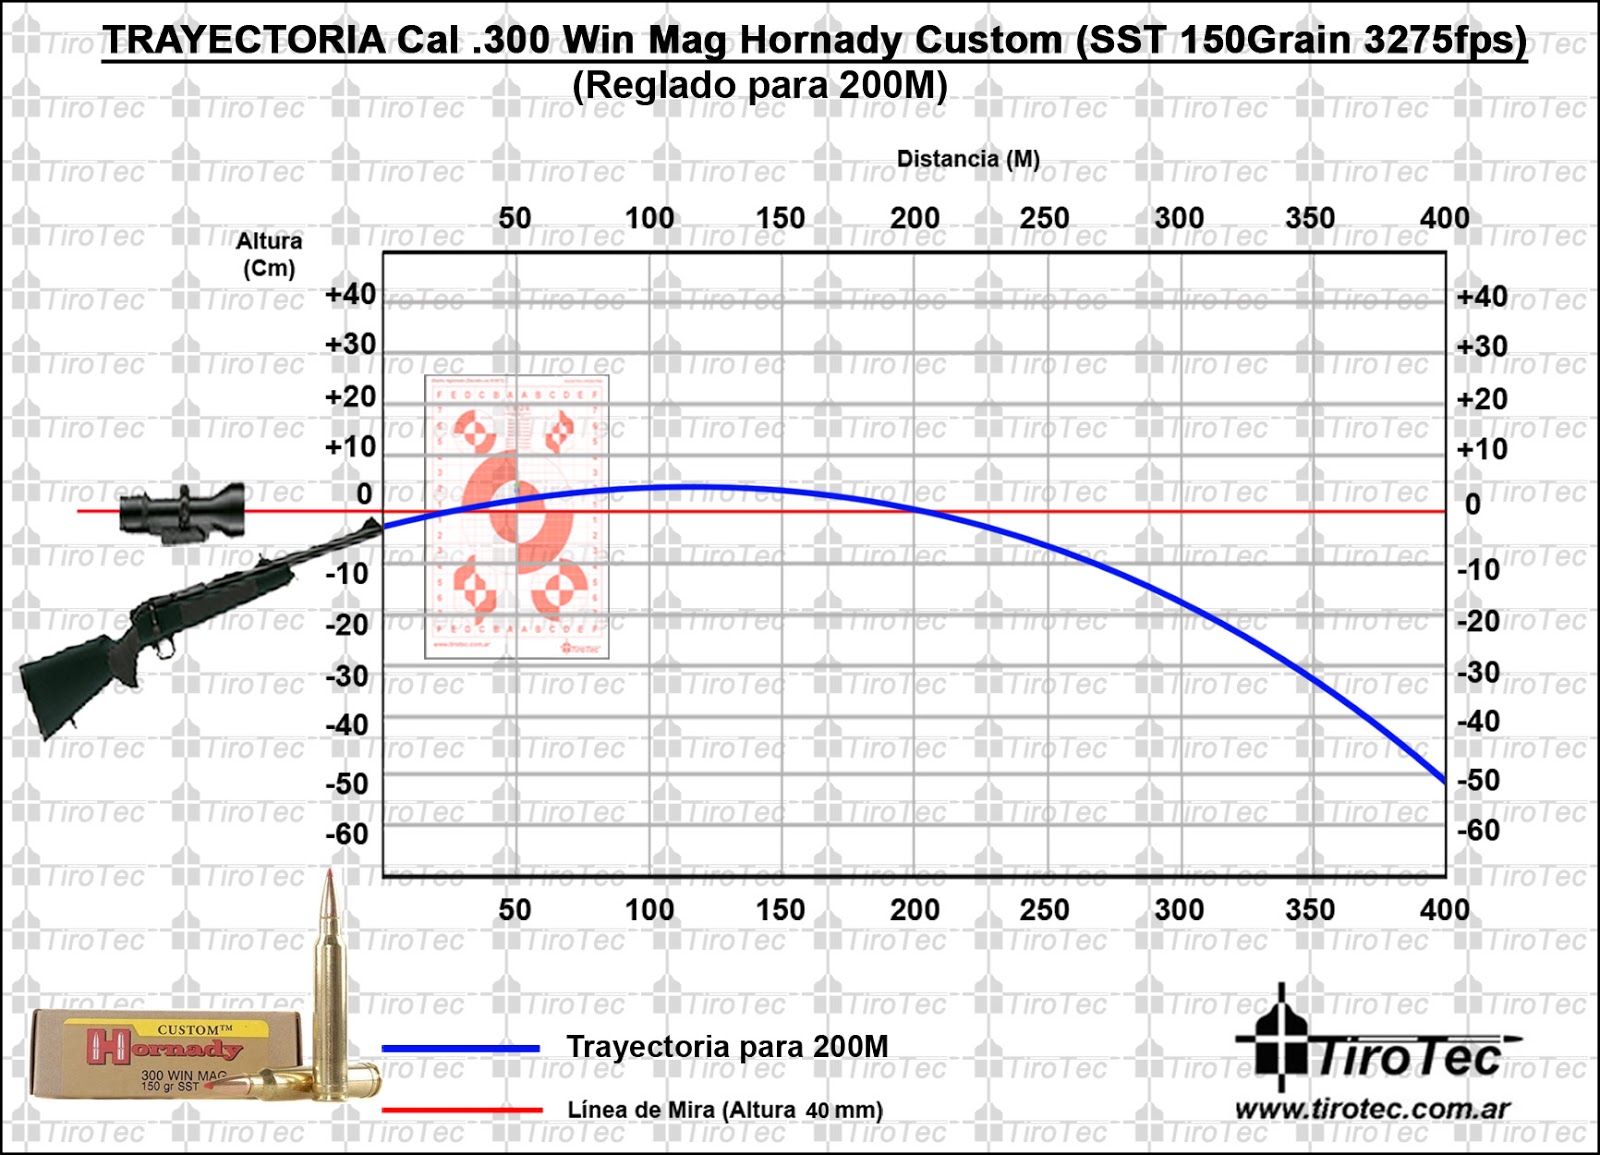 Tirotec: Calibre .300 Win Mag Hornady Custom SST 150Grain 3275fps para 200M